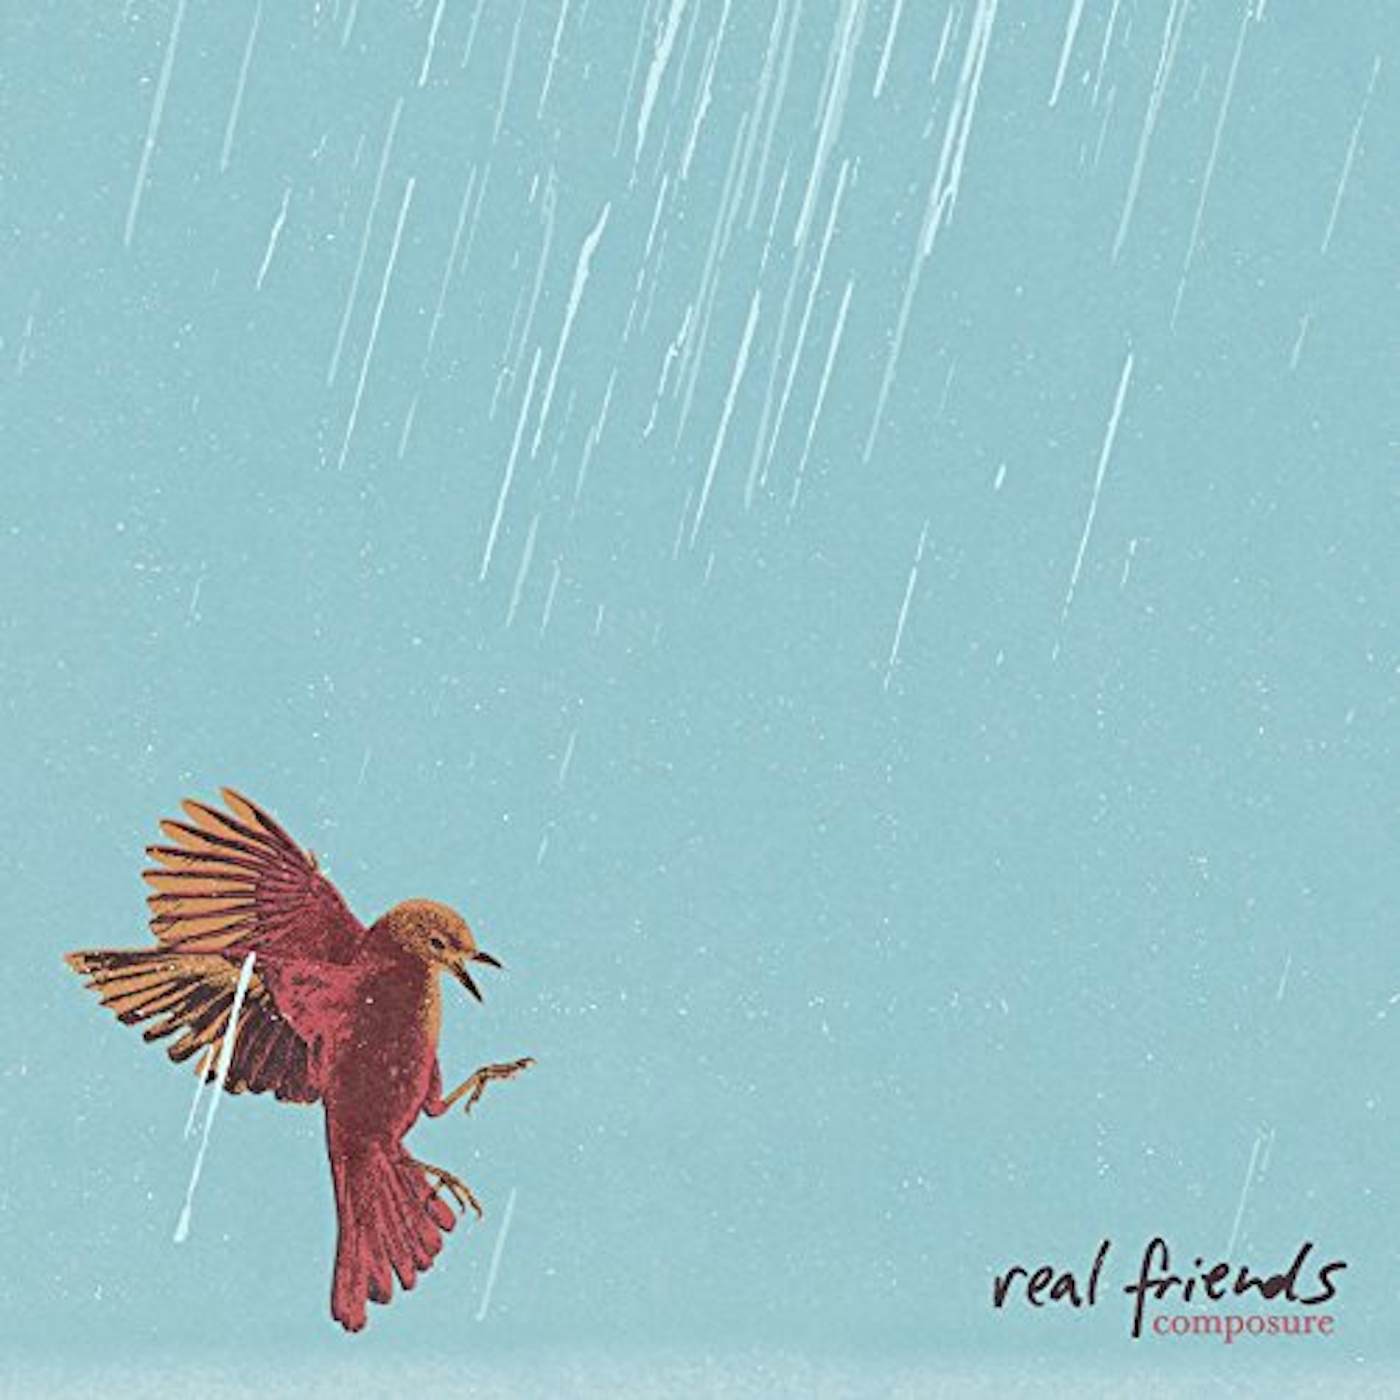 Real Friends Composure Vinyl Record